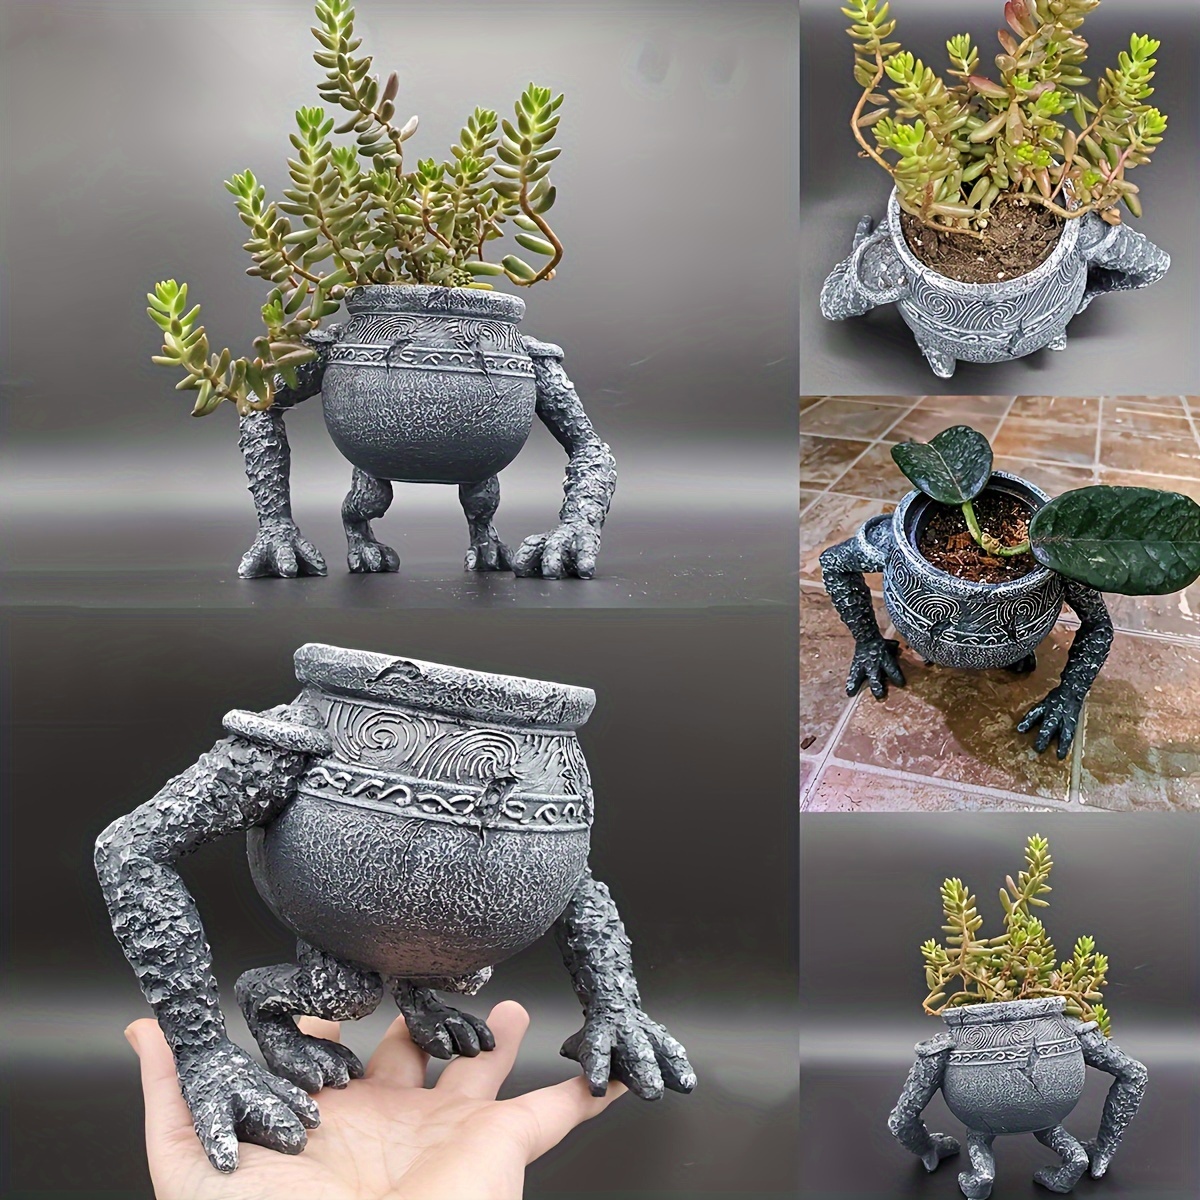 

Resin Decorative Planter - Creative Craft Alexander Pot Sculpture For Home, Garden & Outdoor Display, Artistic Plant Holder, 1 Piece